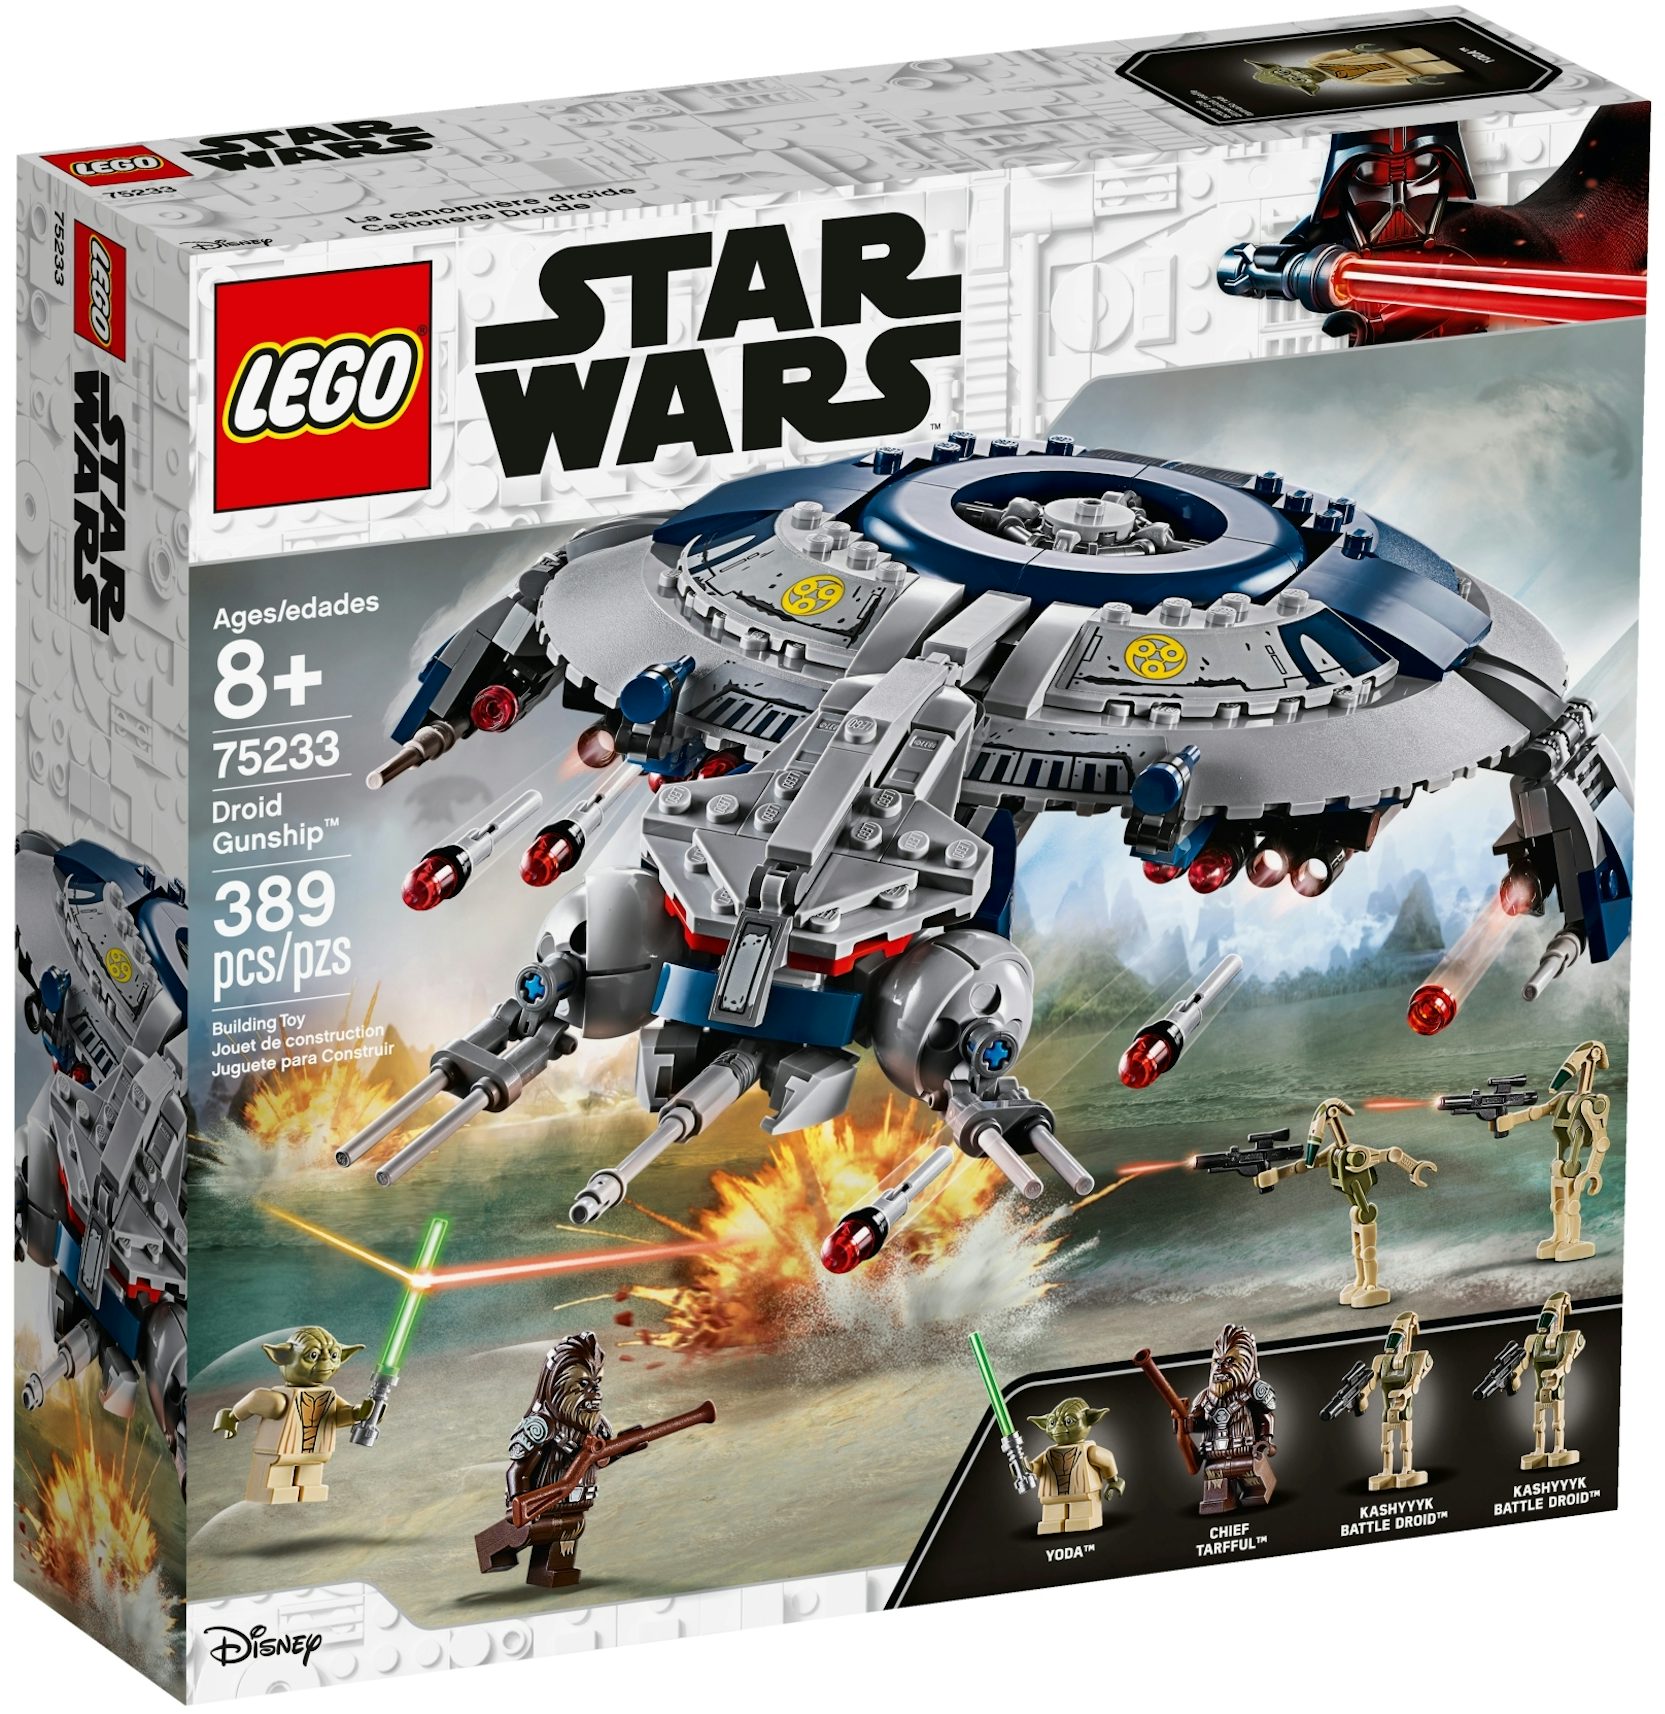 https://images.stockx.com/images/LEGO-Star-Wars-Droid-Gunship-Set-75233.jpg?fit=fill&bg=FFFFFF&w=1200&h=857&fm=jpg&auto=compress&dpr=2&trim=color&updated_at=1616442082&q=60